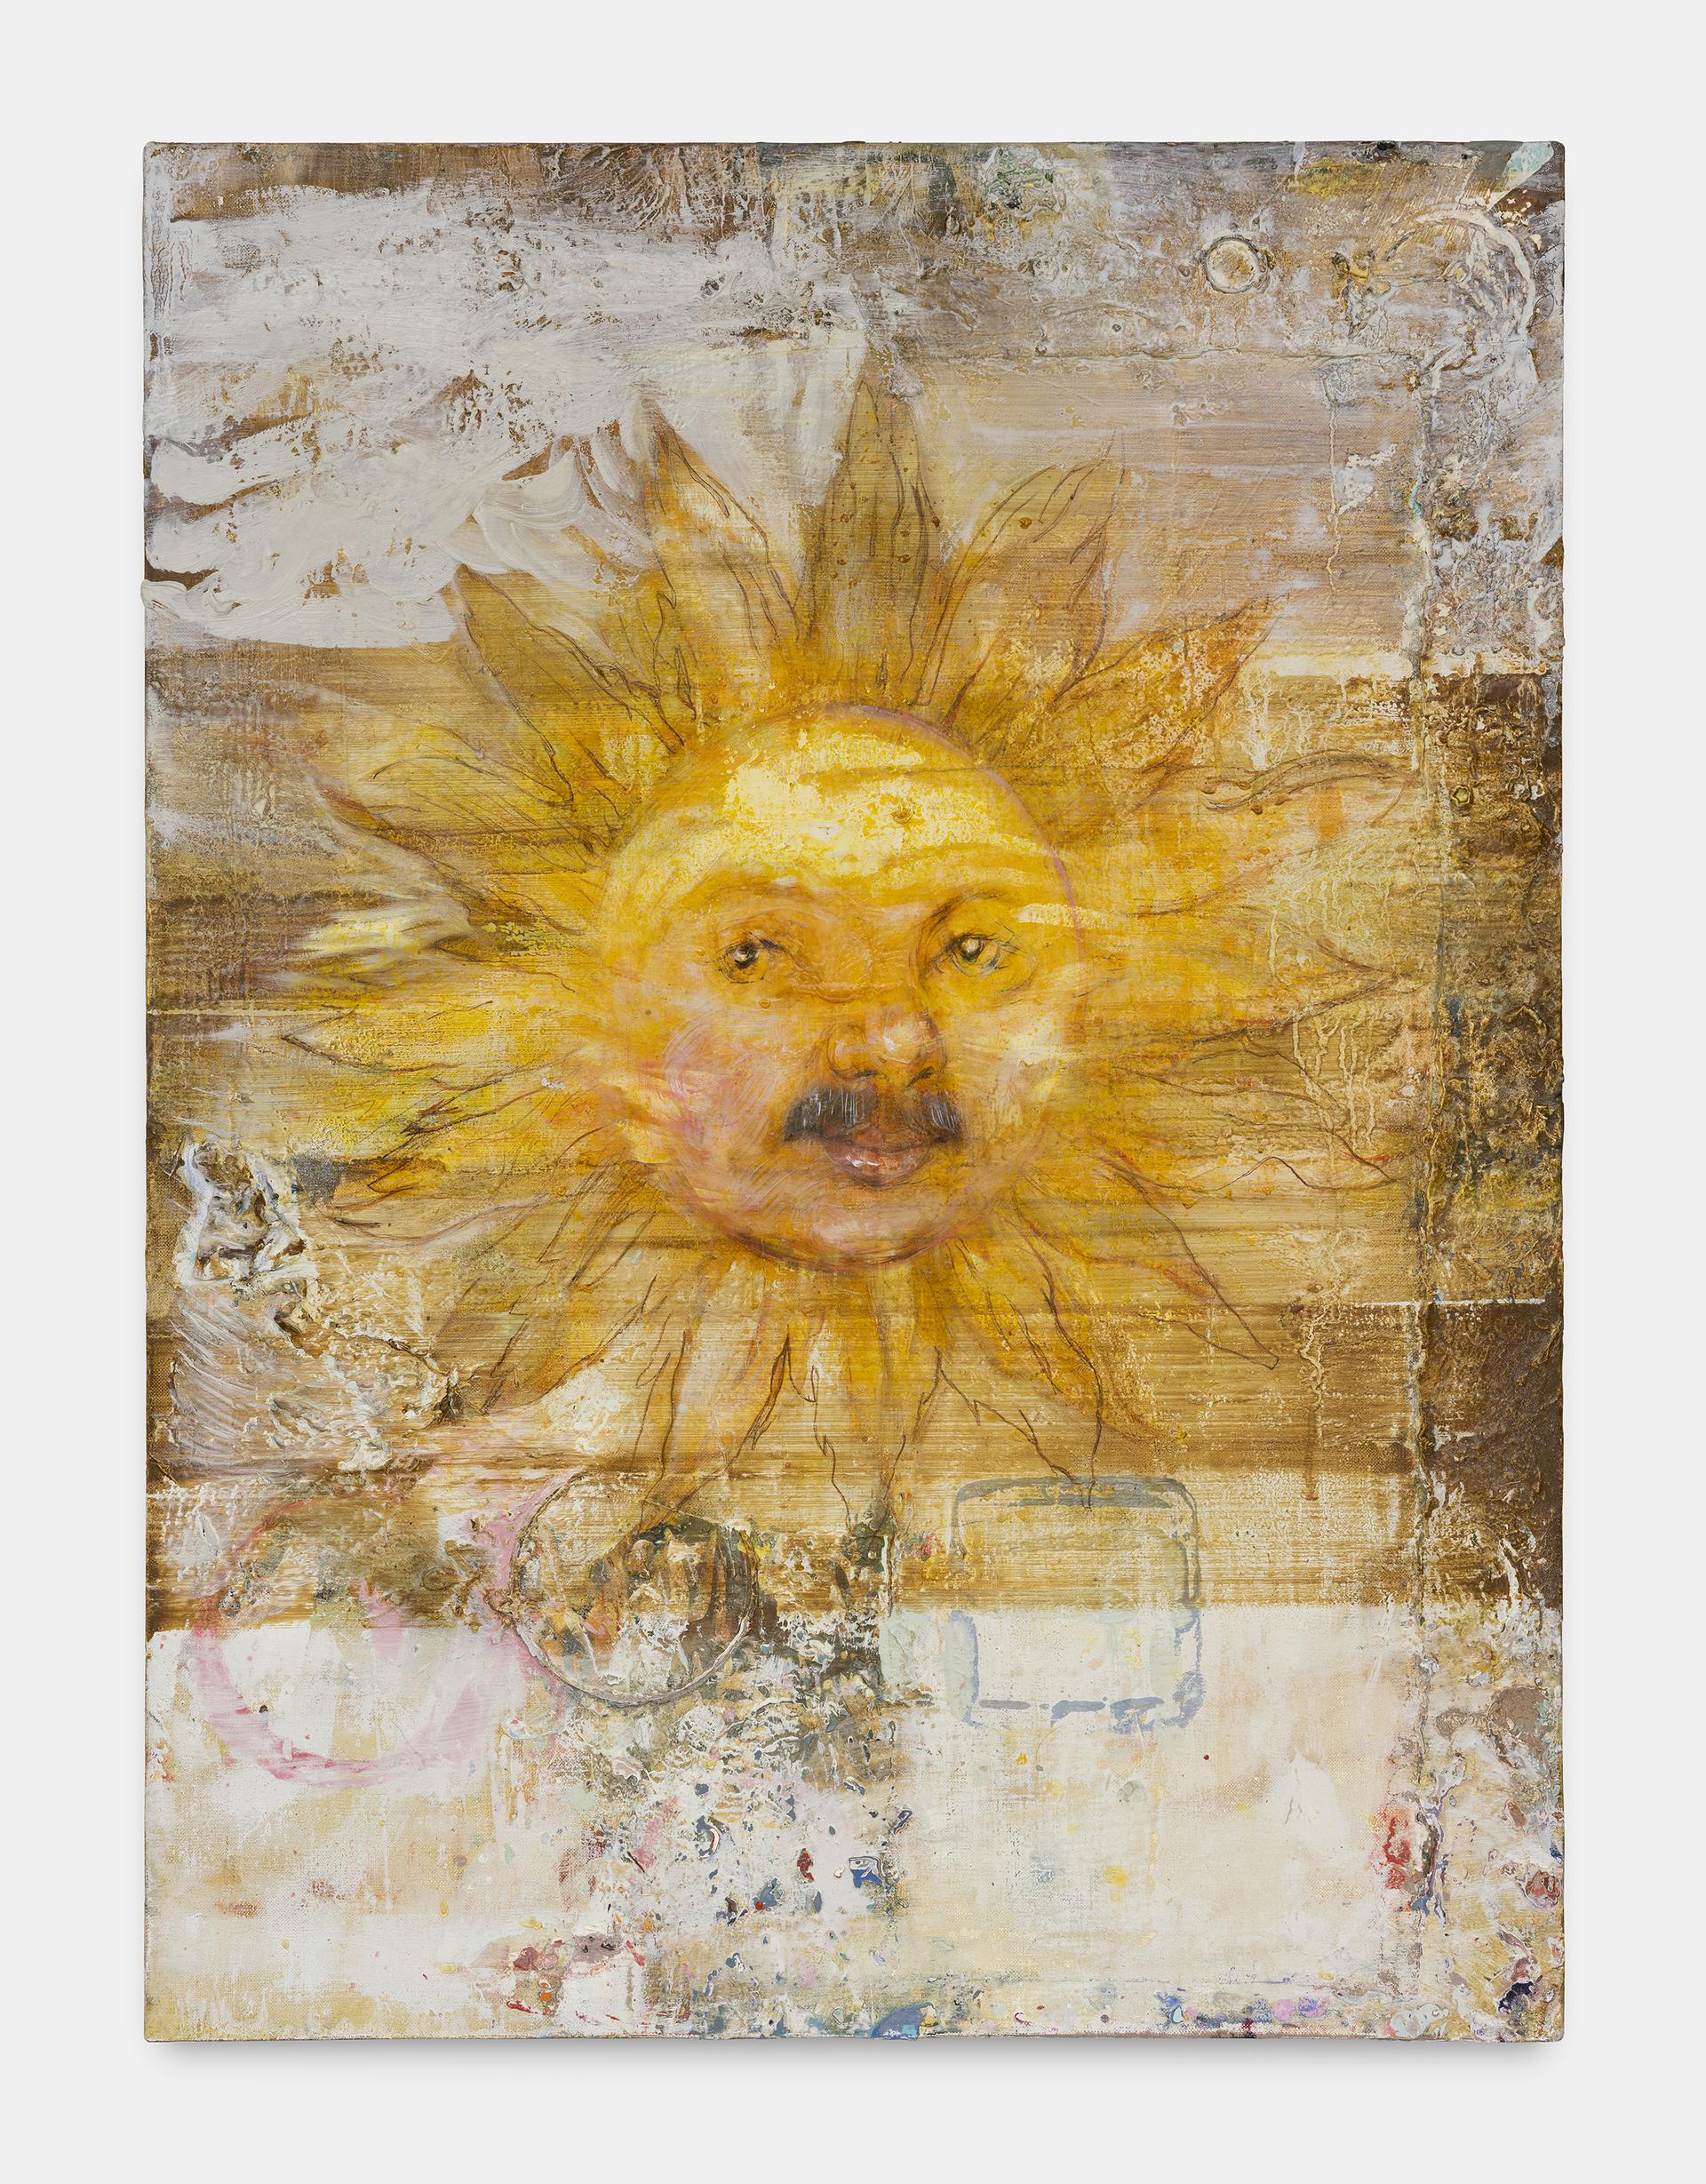 Radek Szlaga, Wój Słońce (Uncle Sun), 2022, olio su tela, 80 x 60 cm